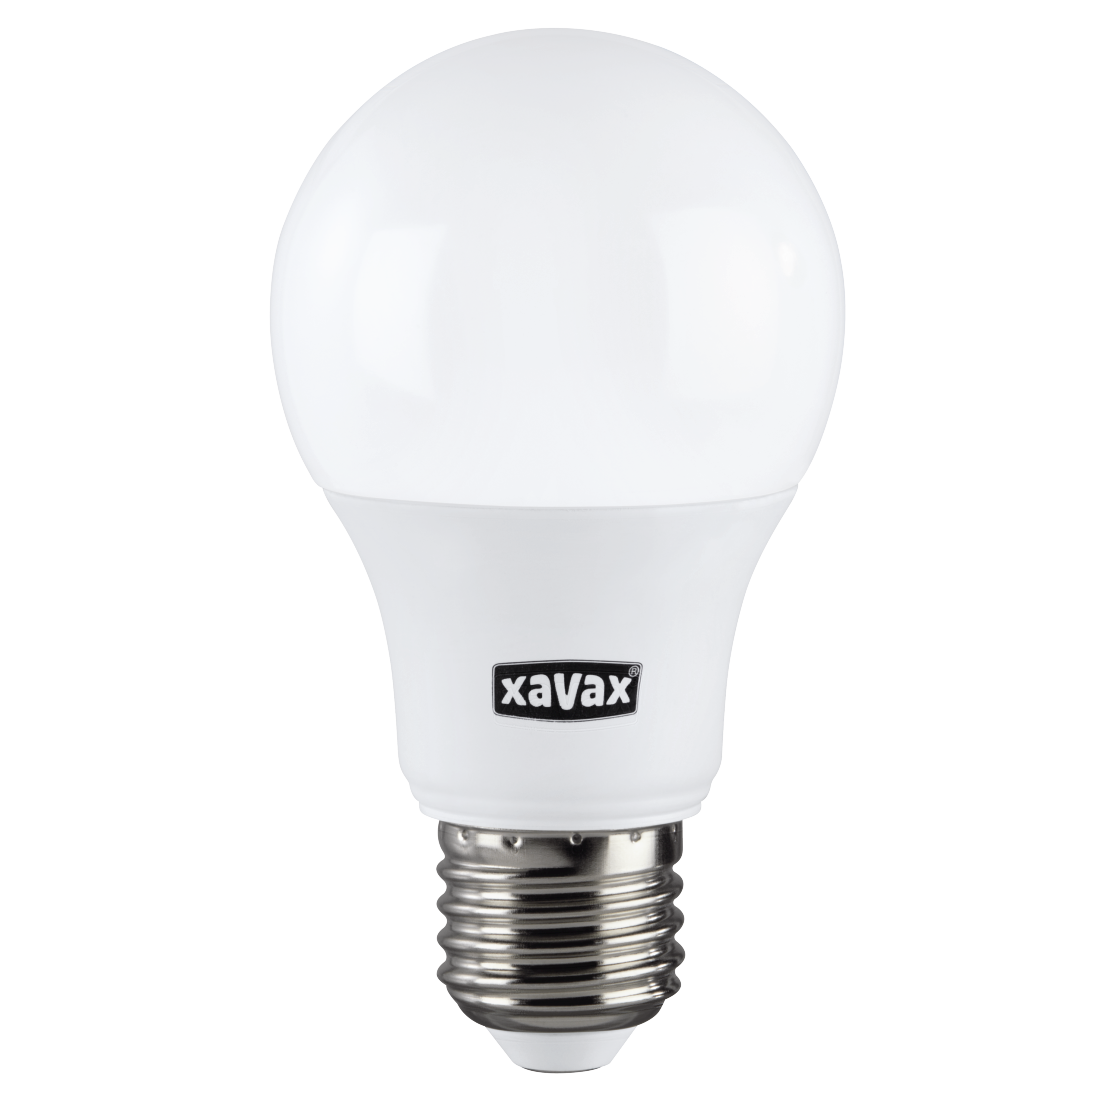 00112620 Xavax Led Bulb E27 806lm Replaces 60w Incandescent Bulb Warm White Ra90 Xavax Eu